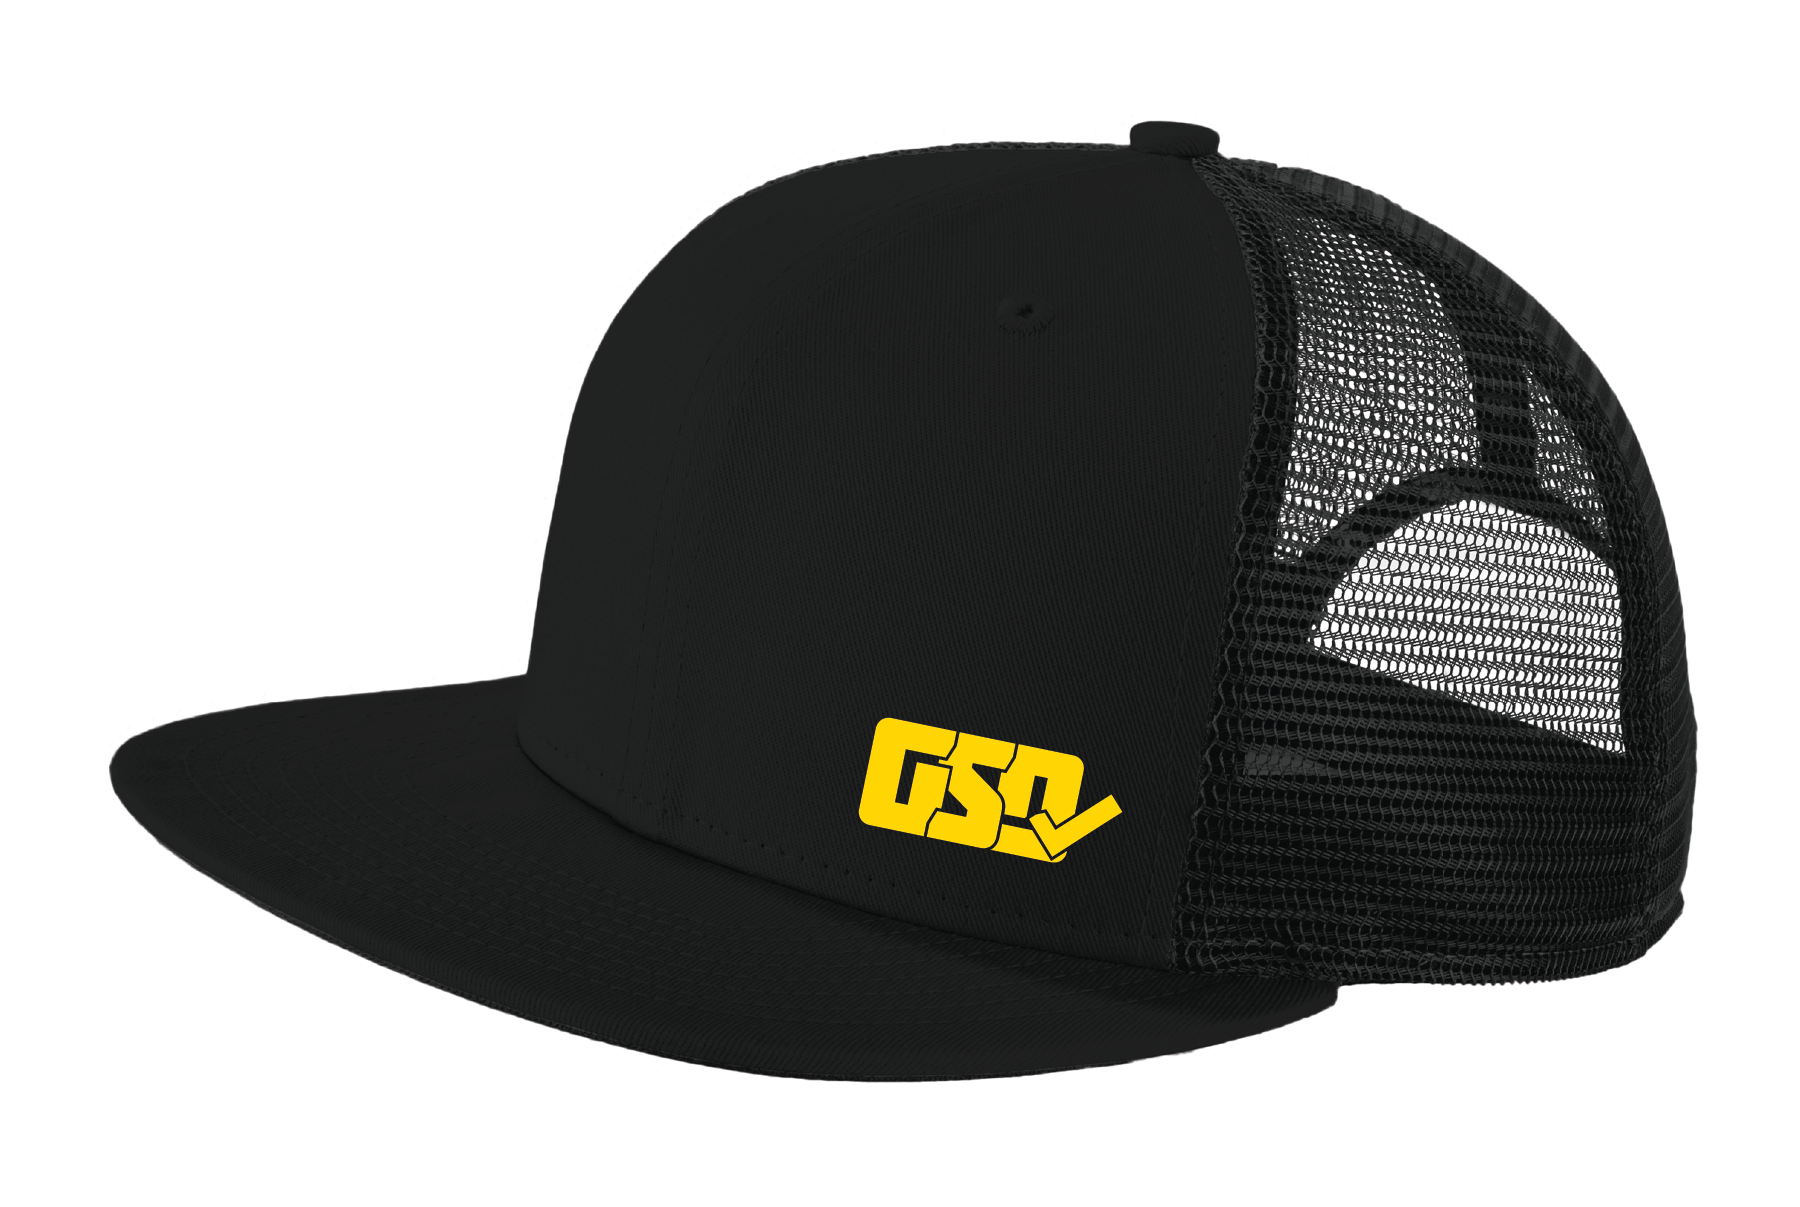 GSD LEFTY Mesh Snap Back Flat Brim Hat - Black / Yellow - "Wiz"